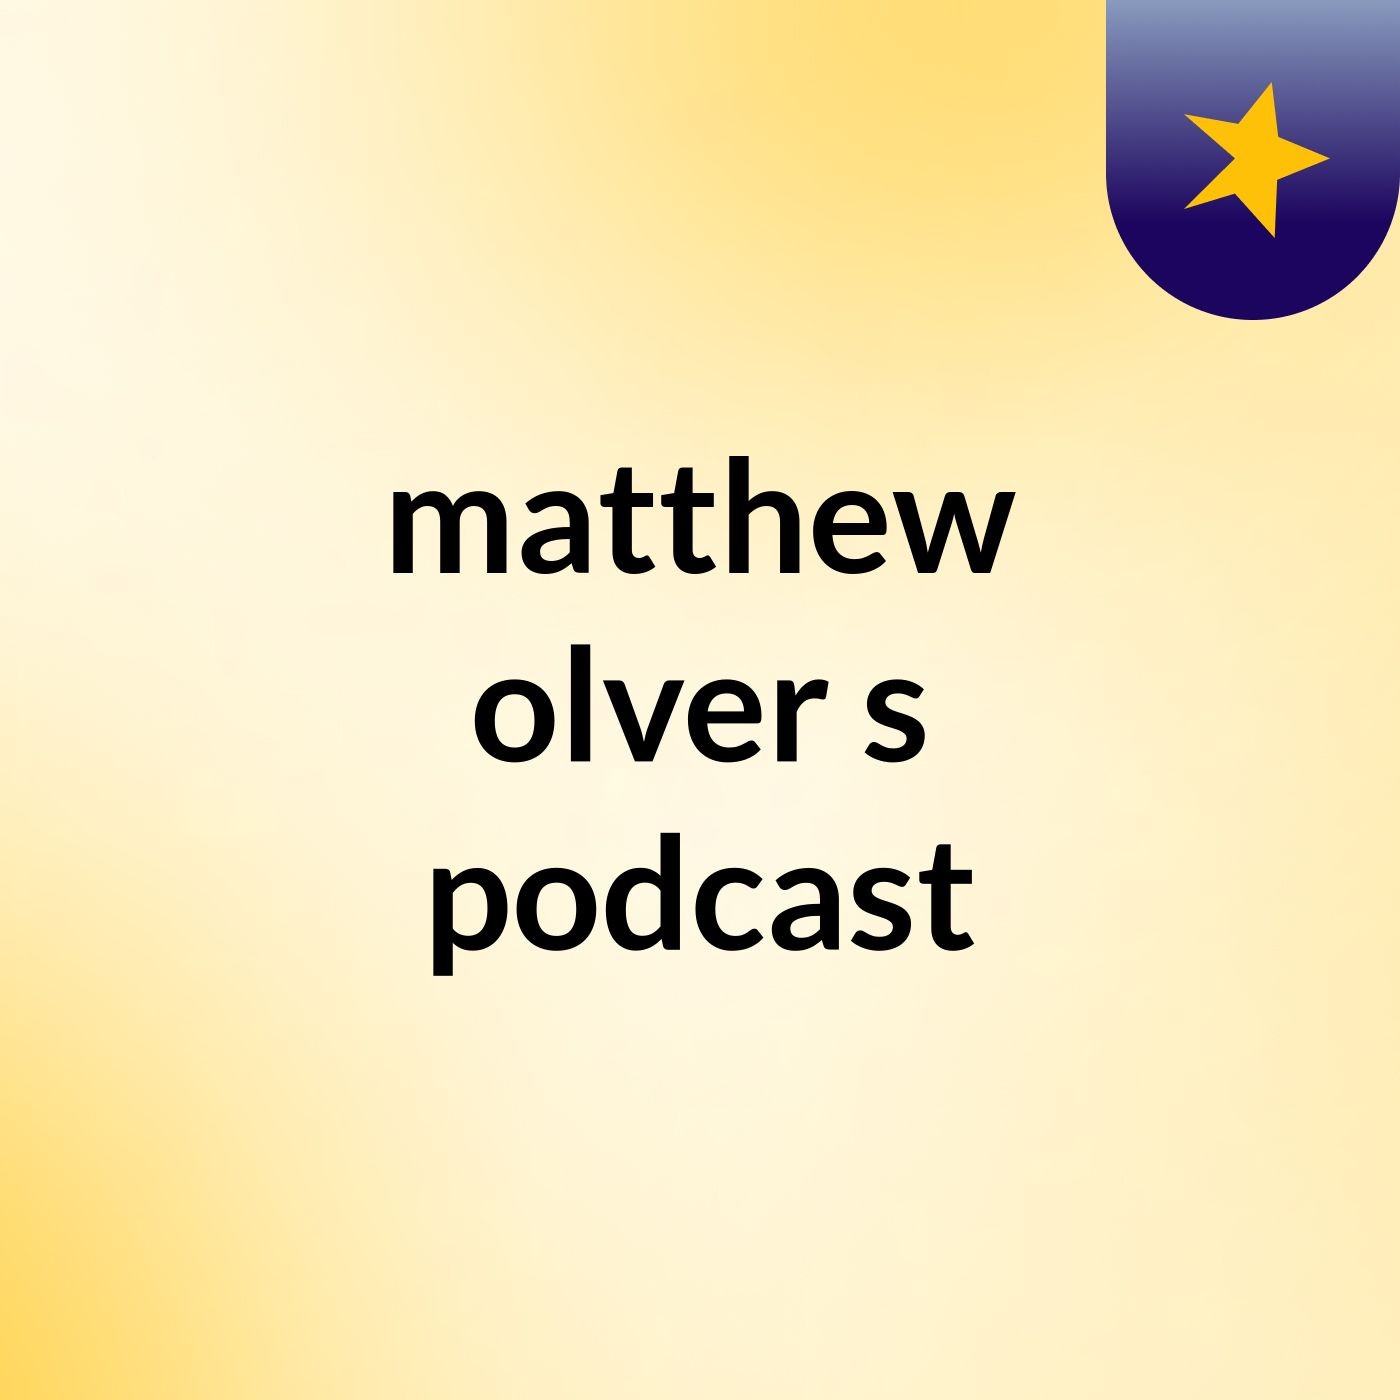 matthew olver's podcast